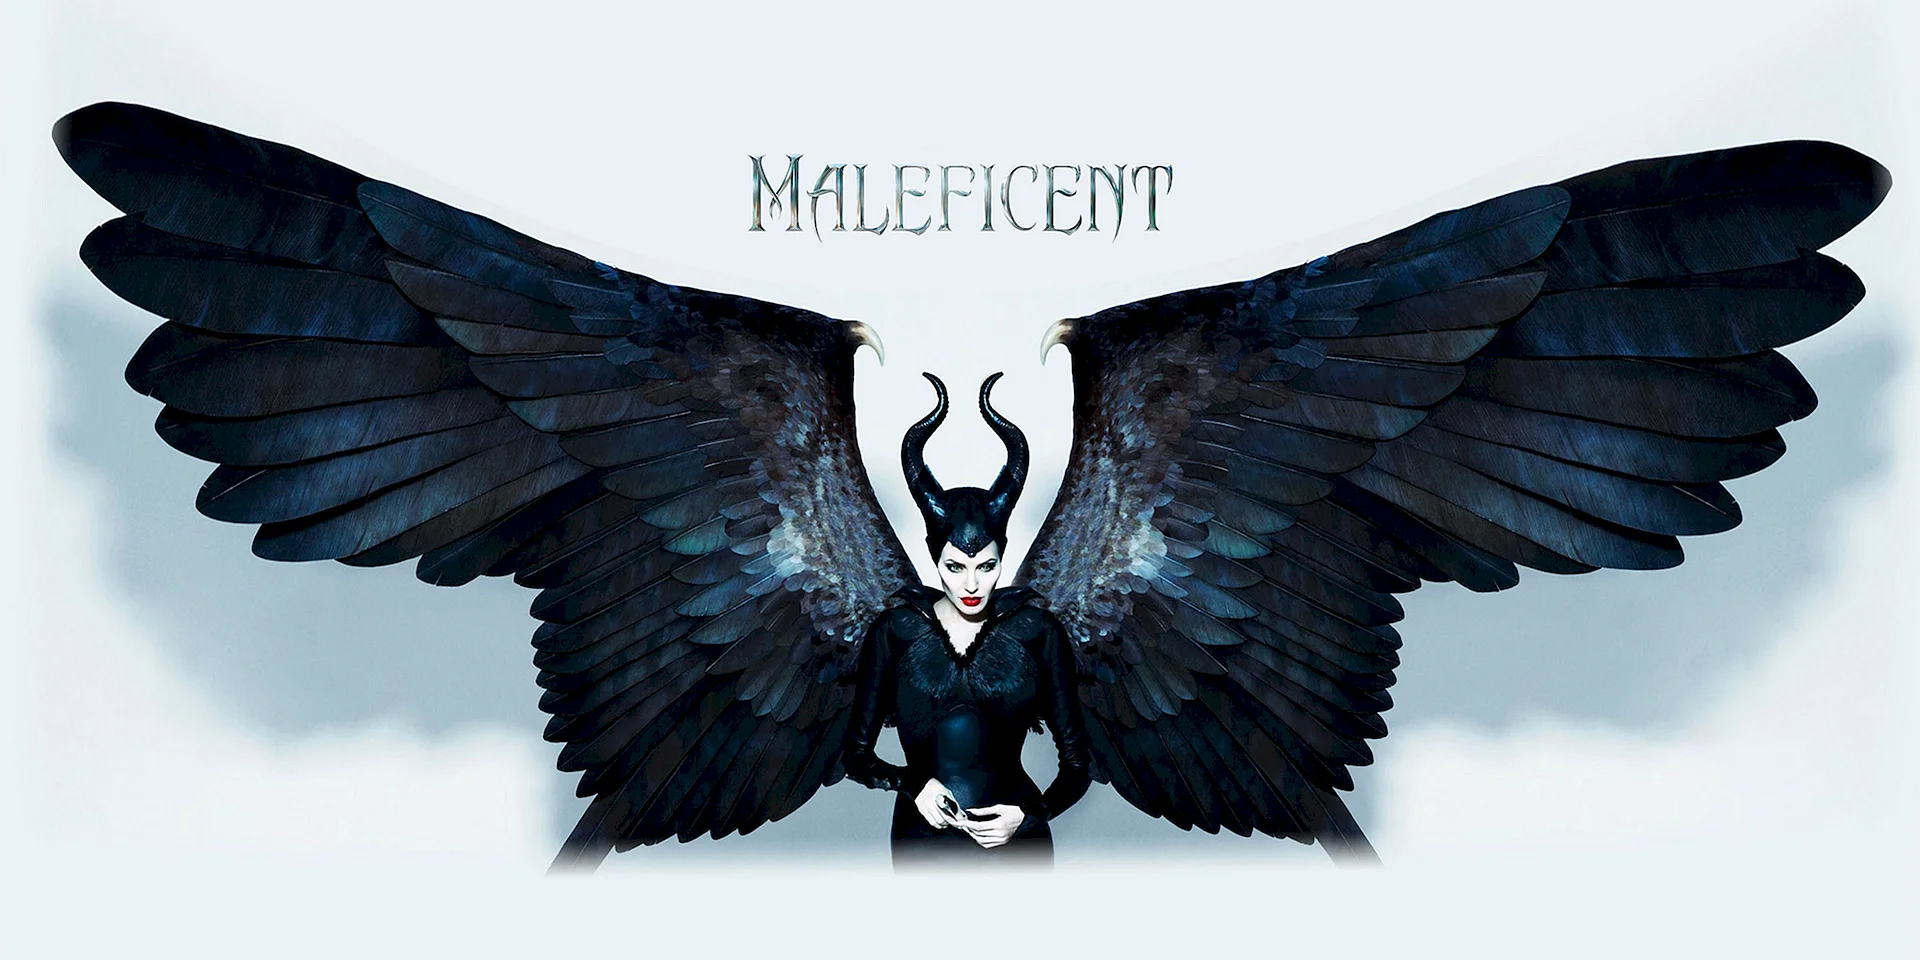 Maleficent Wings Wallpaper